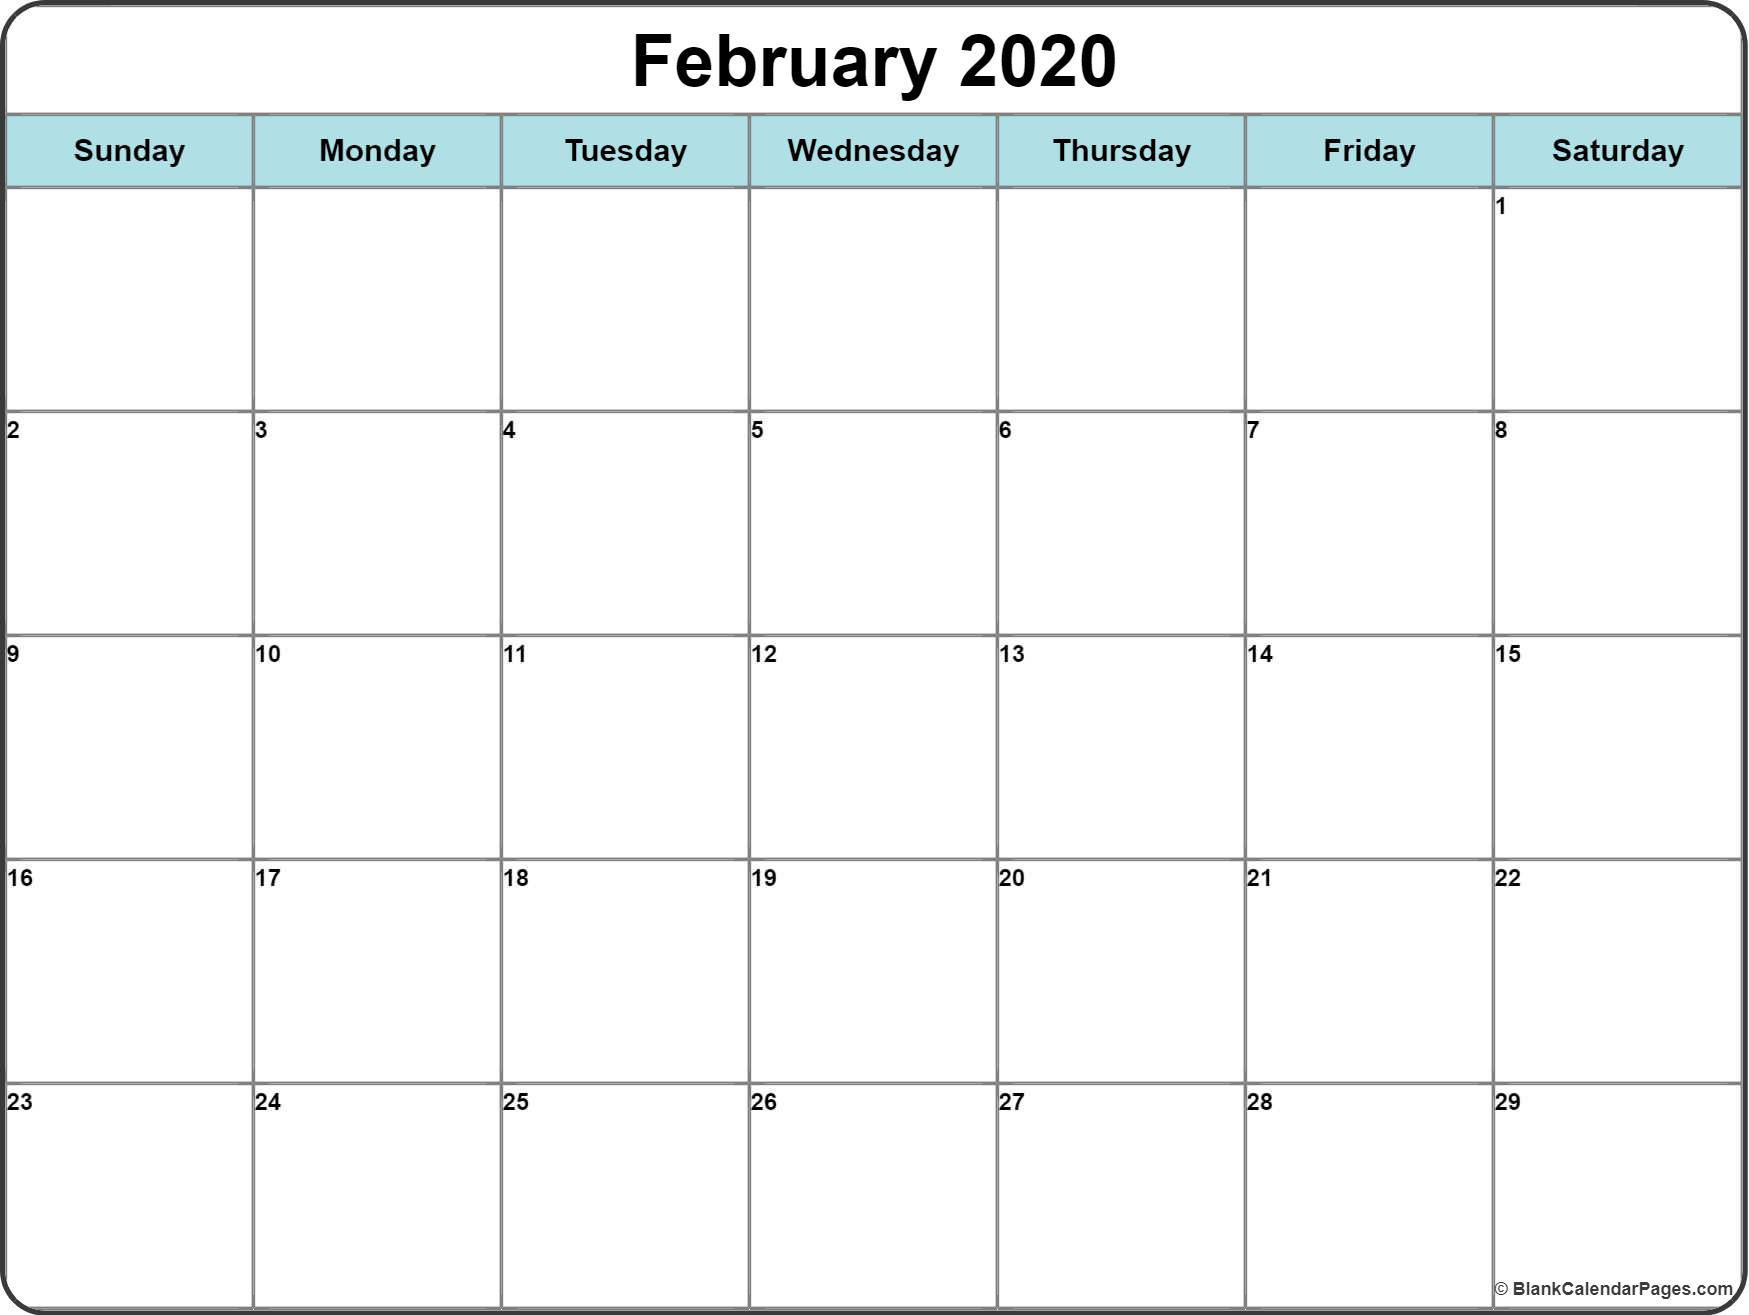 February 2020 Calendar | Free Printable Monthly Calendars